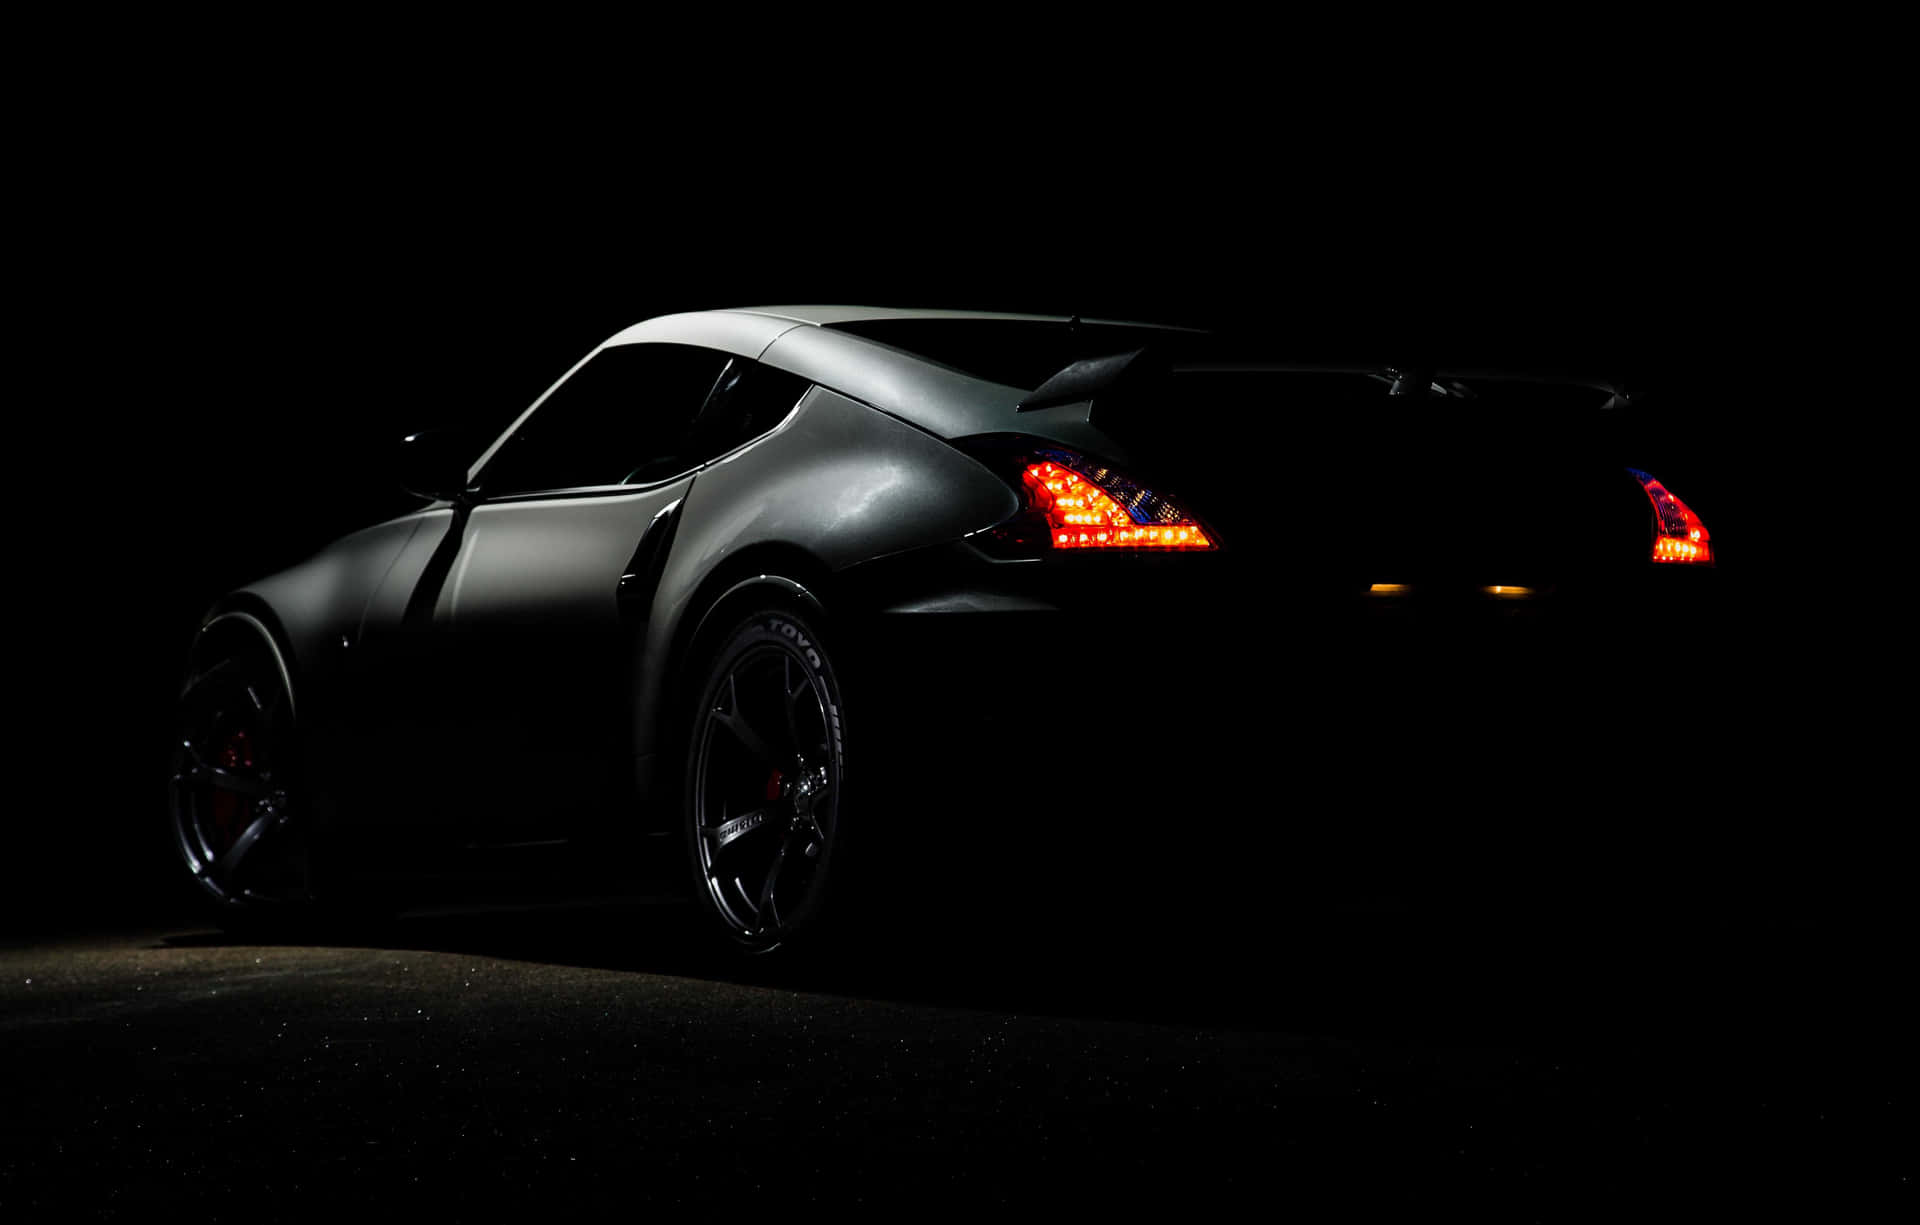 Sleek Black Sports Car Nighttime Wallpaper